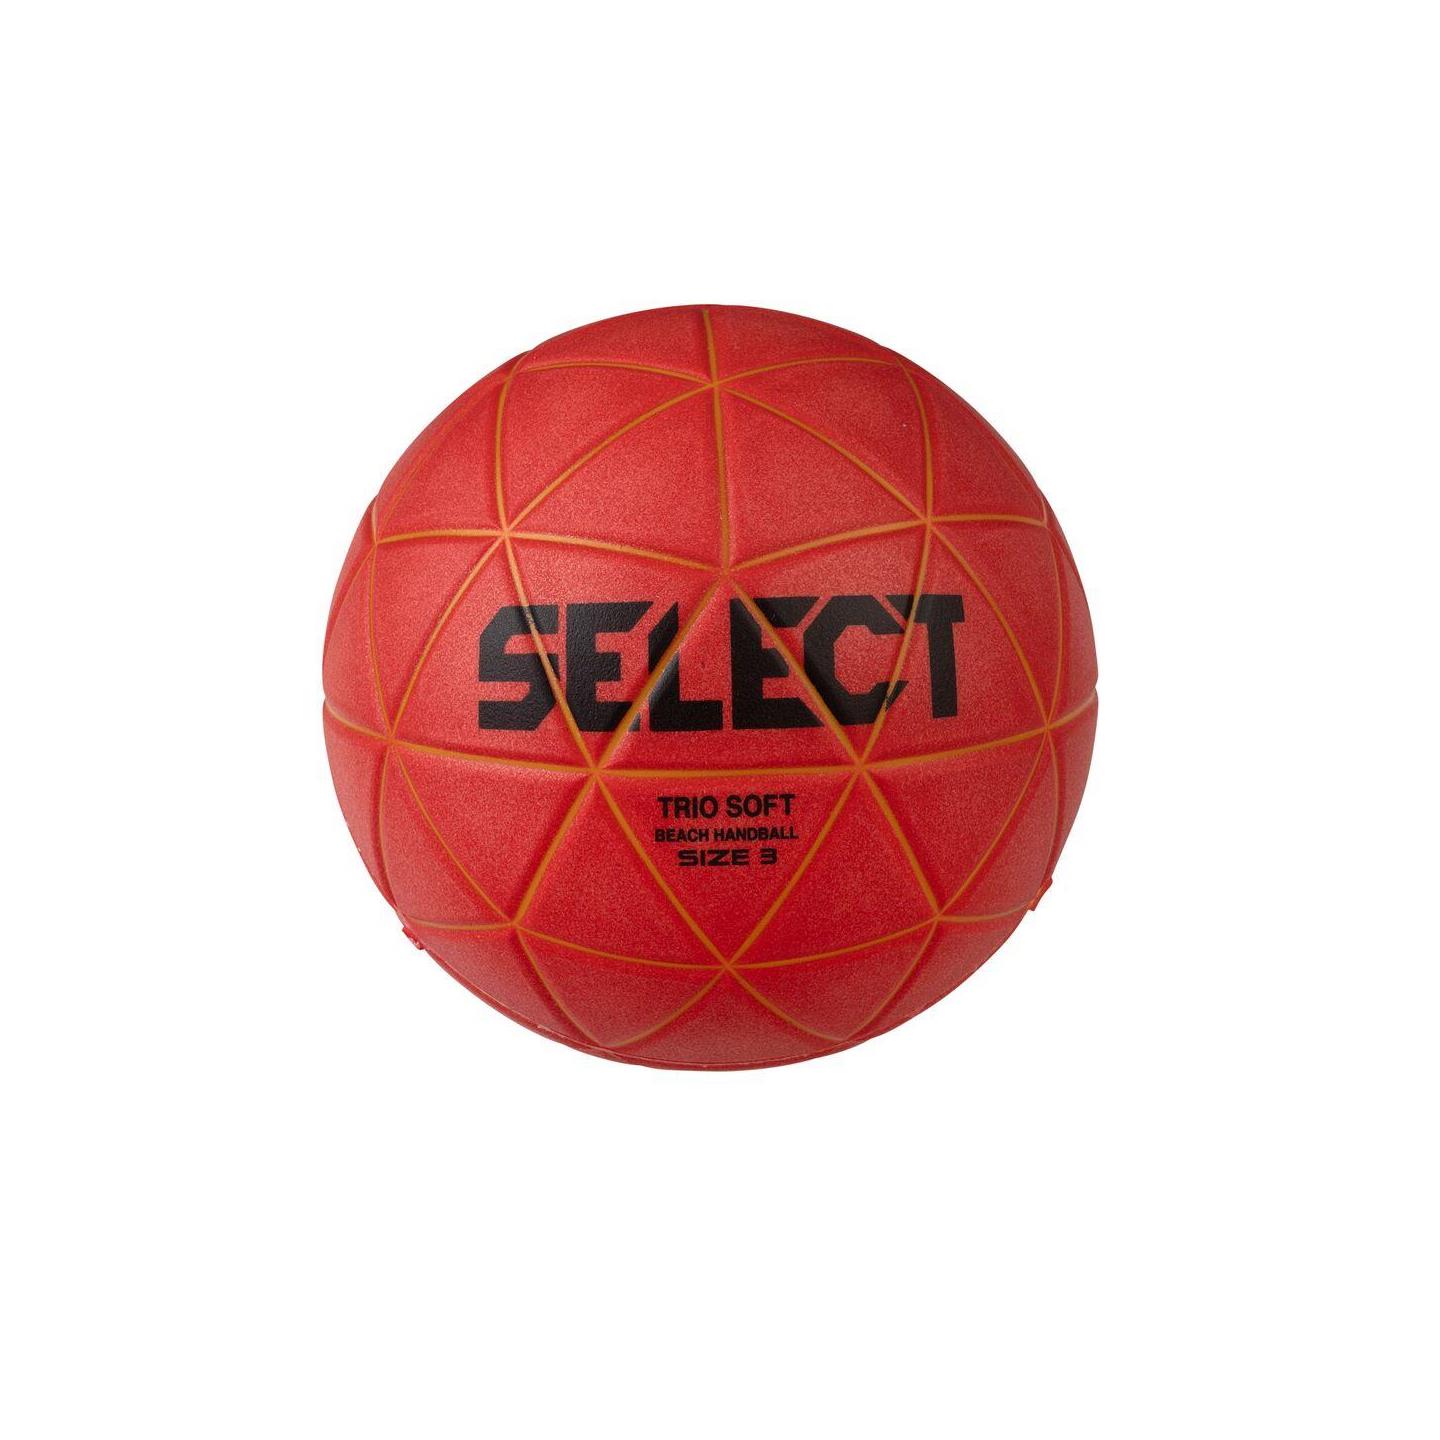 Håndball Select Duo Soft Beach Sr. str 3